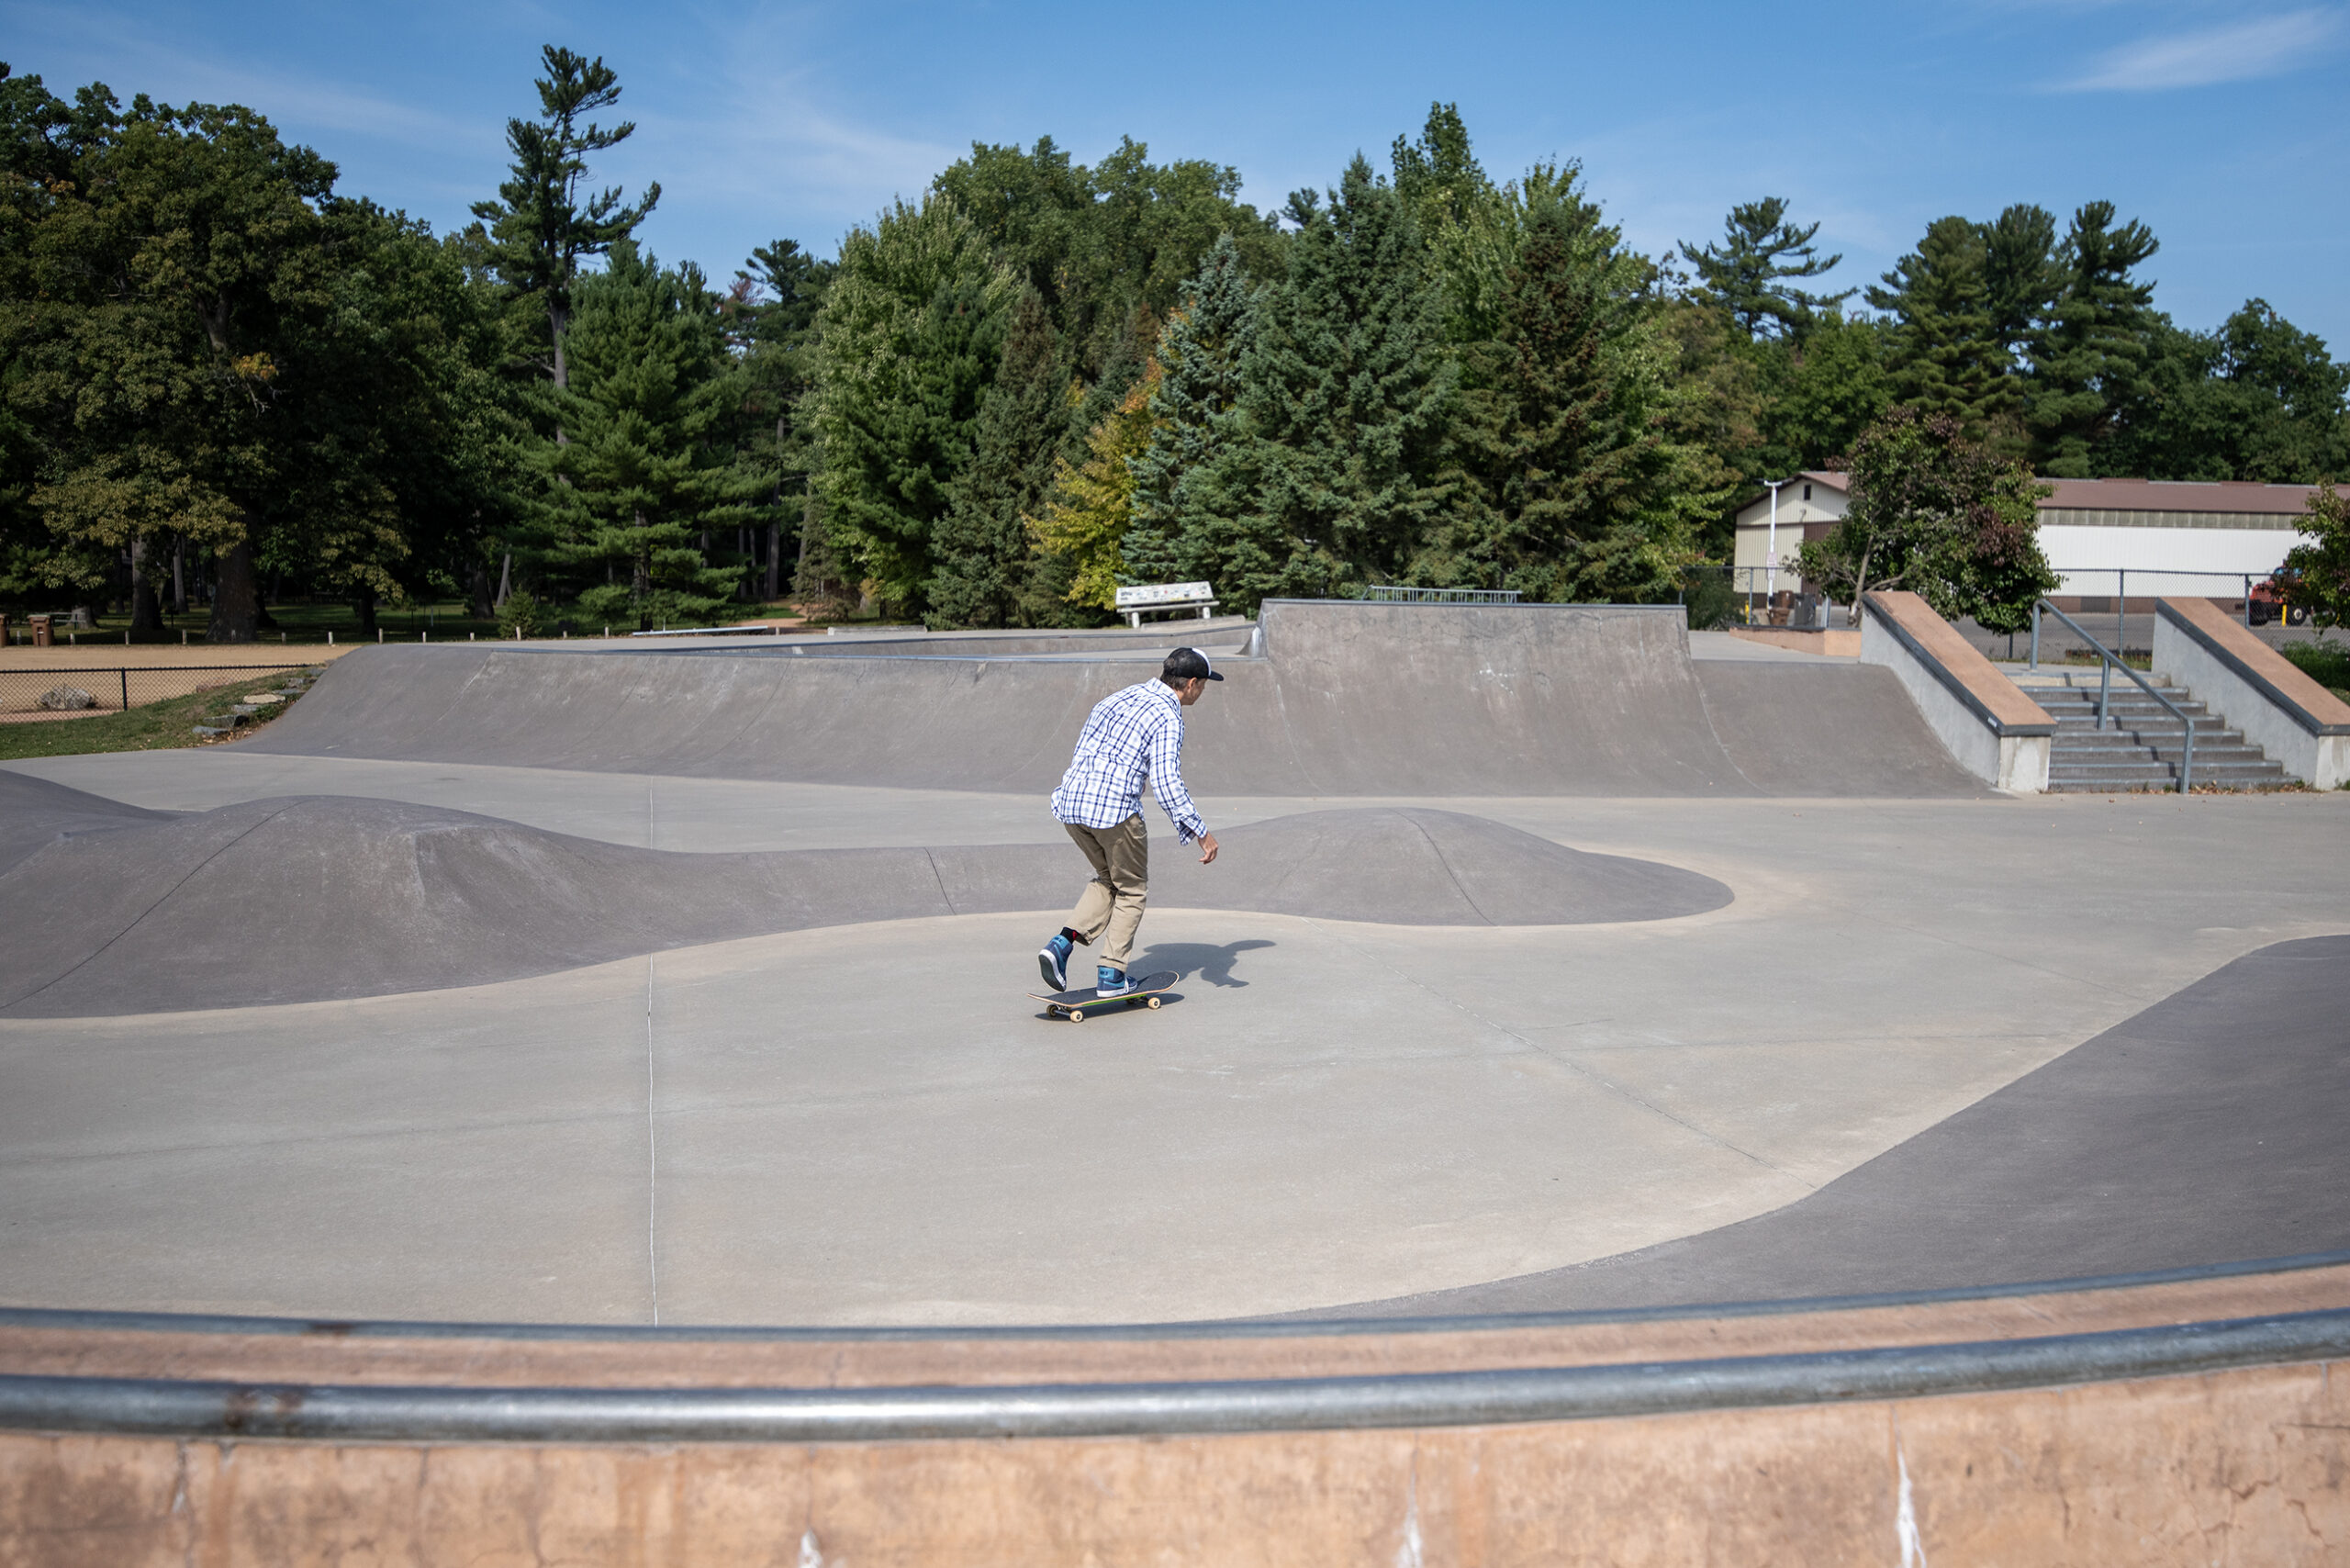 John skateboards across a concrete skate park.